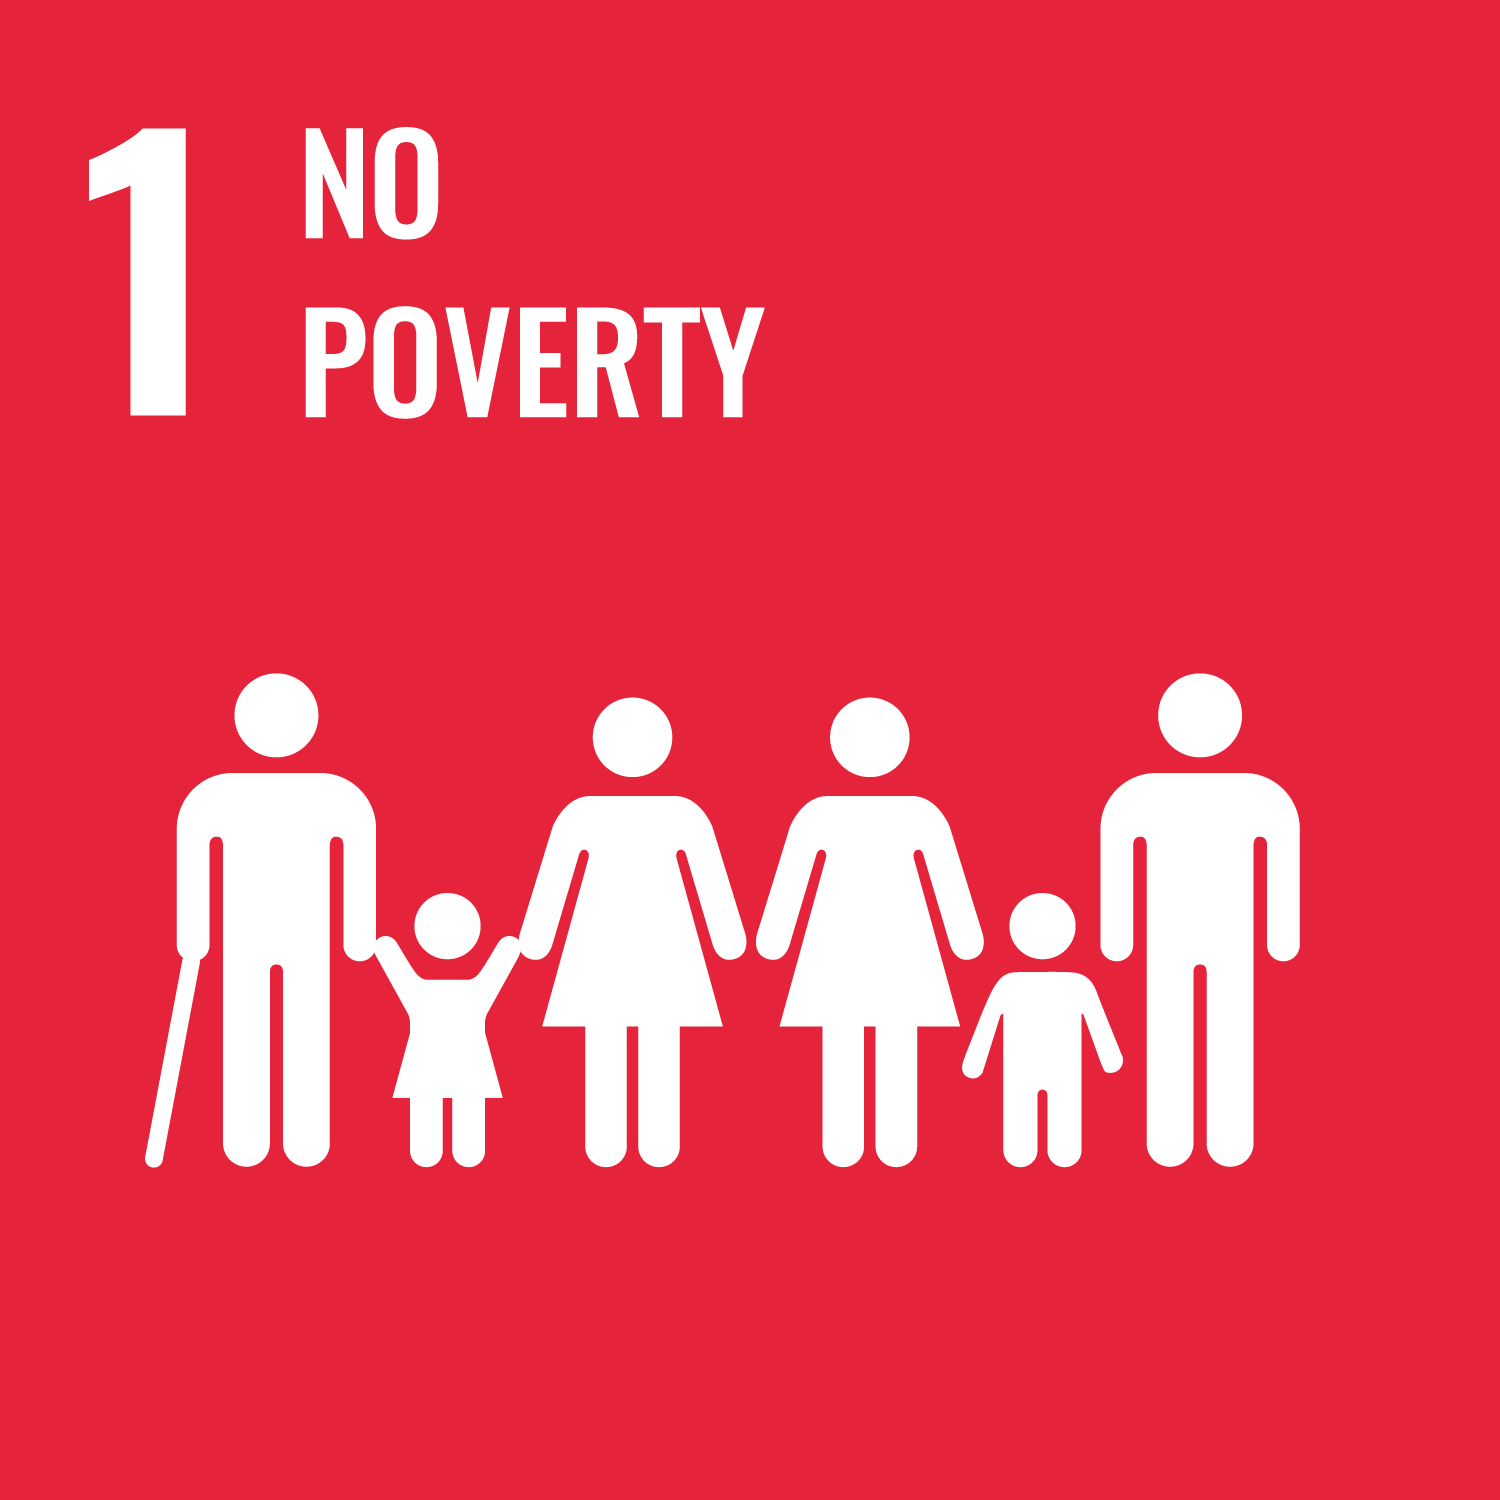 01. No poverty